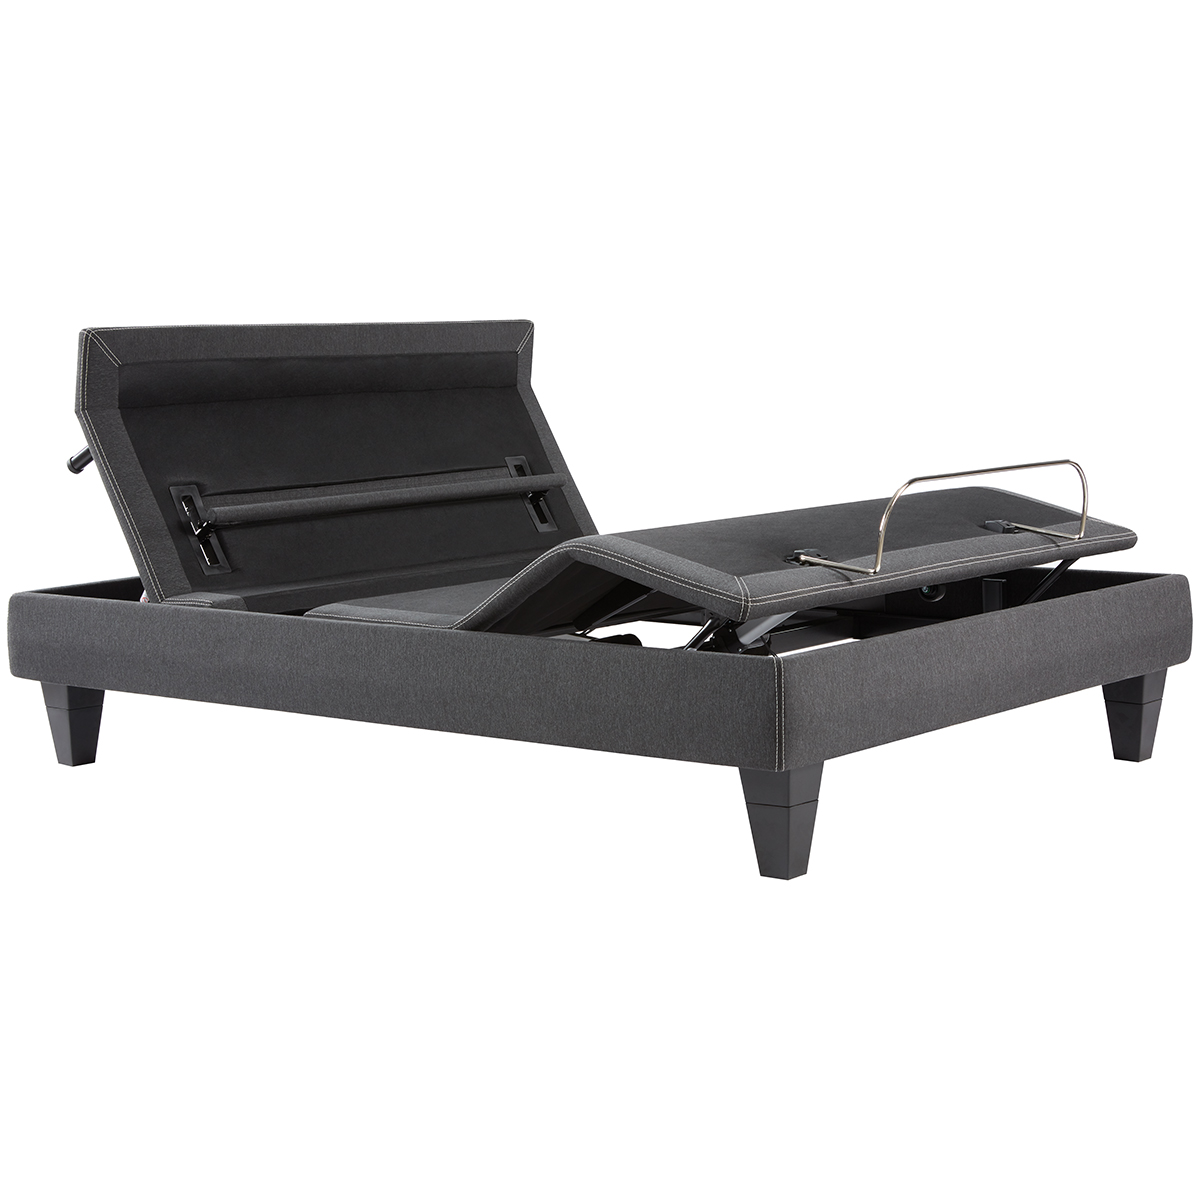 Beautyrest(R) Black Luxury Adjustable Base